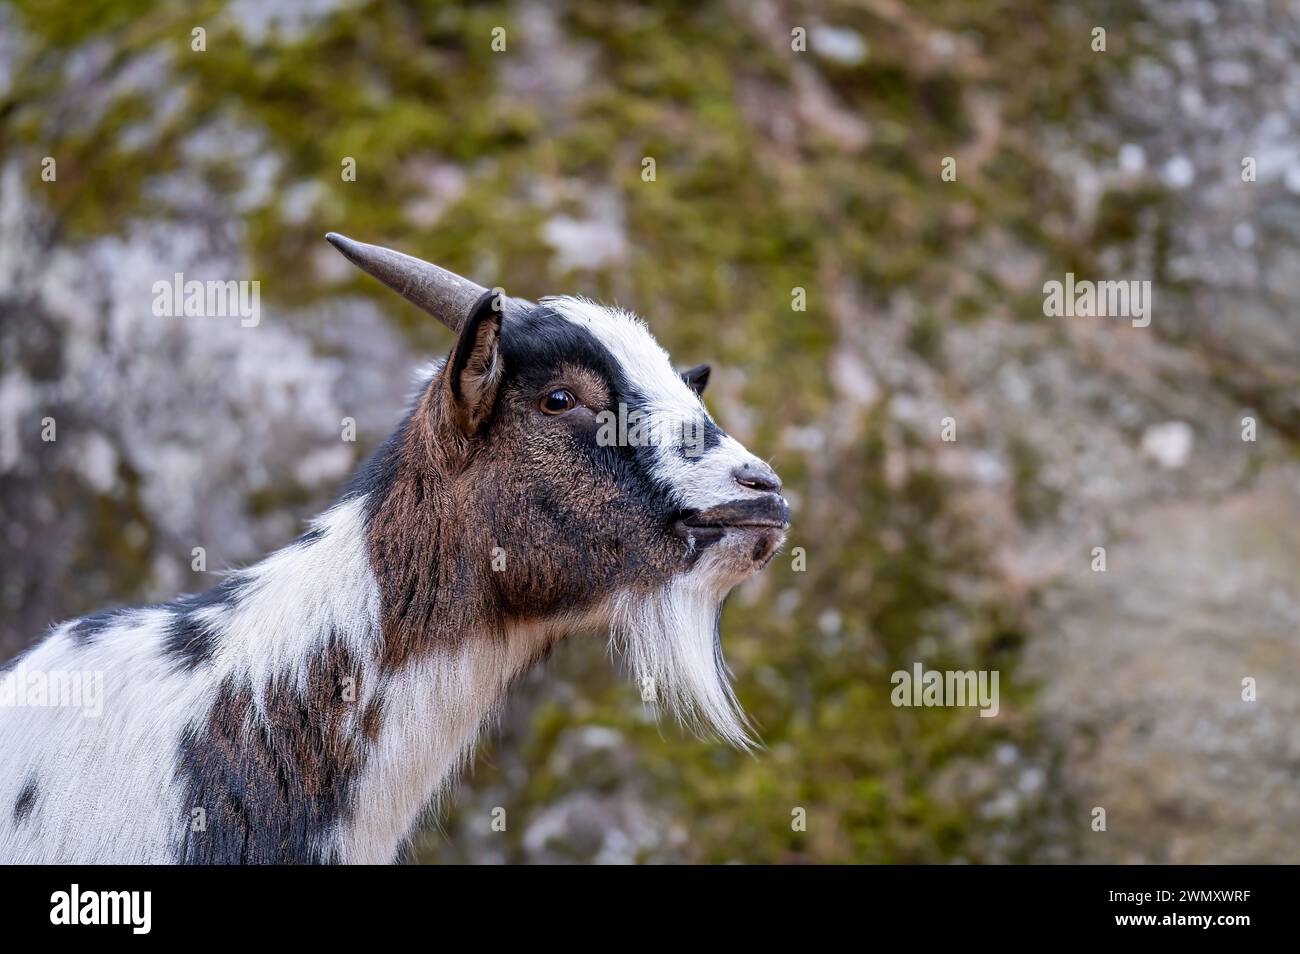 One brown and white Bezoar goat. Capra hircus. Outdoors. Stock Photo